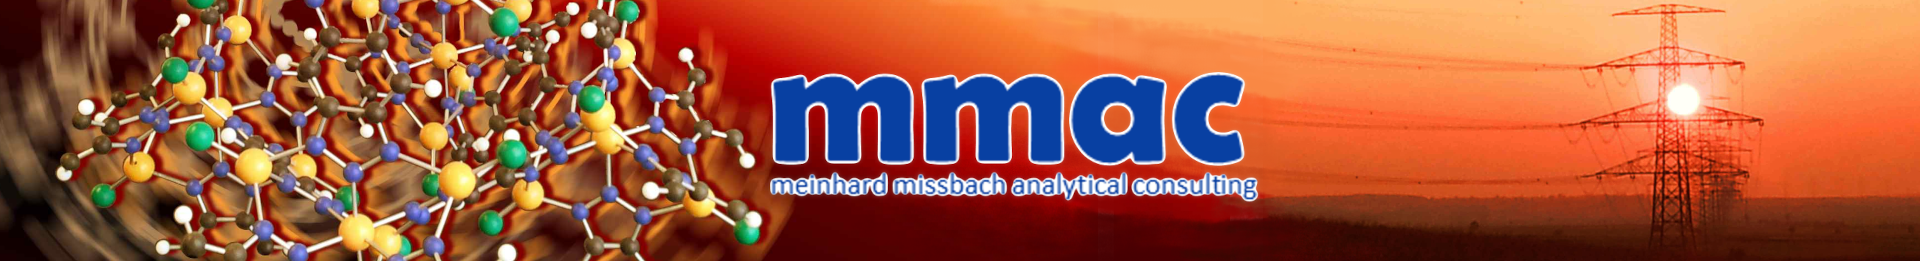 mmac – Meinhard Missbach Analytical Consulting